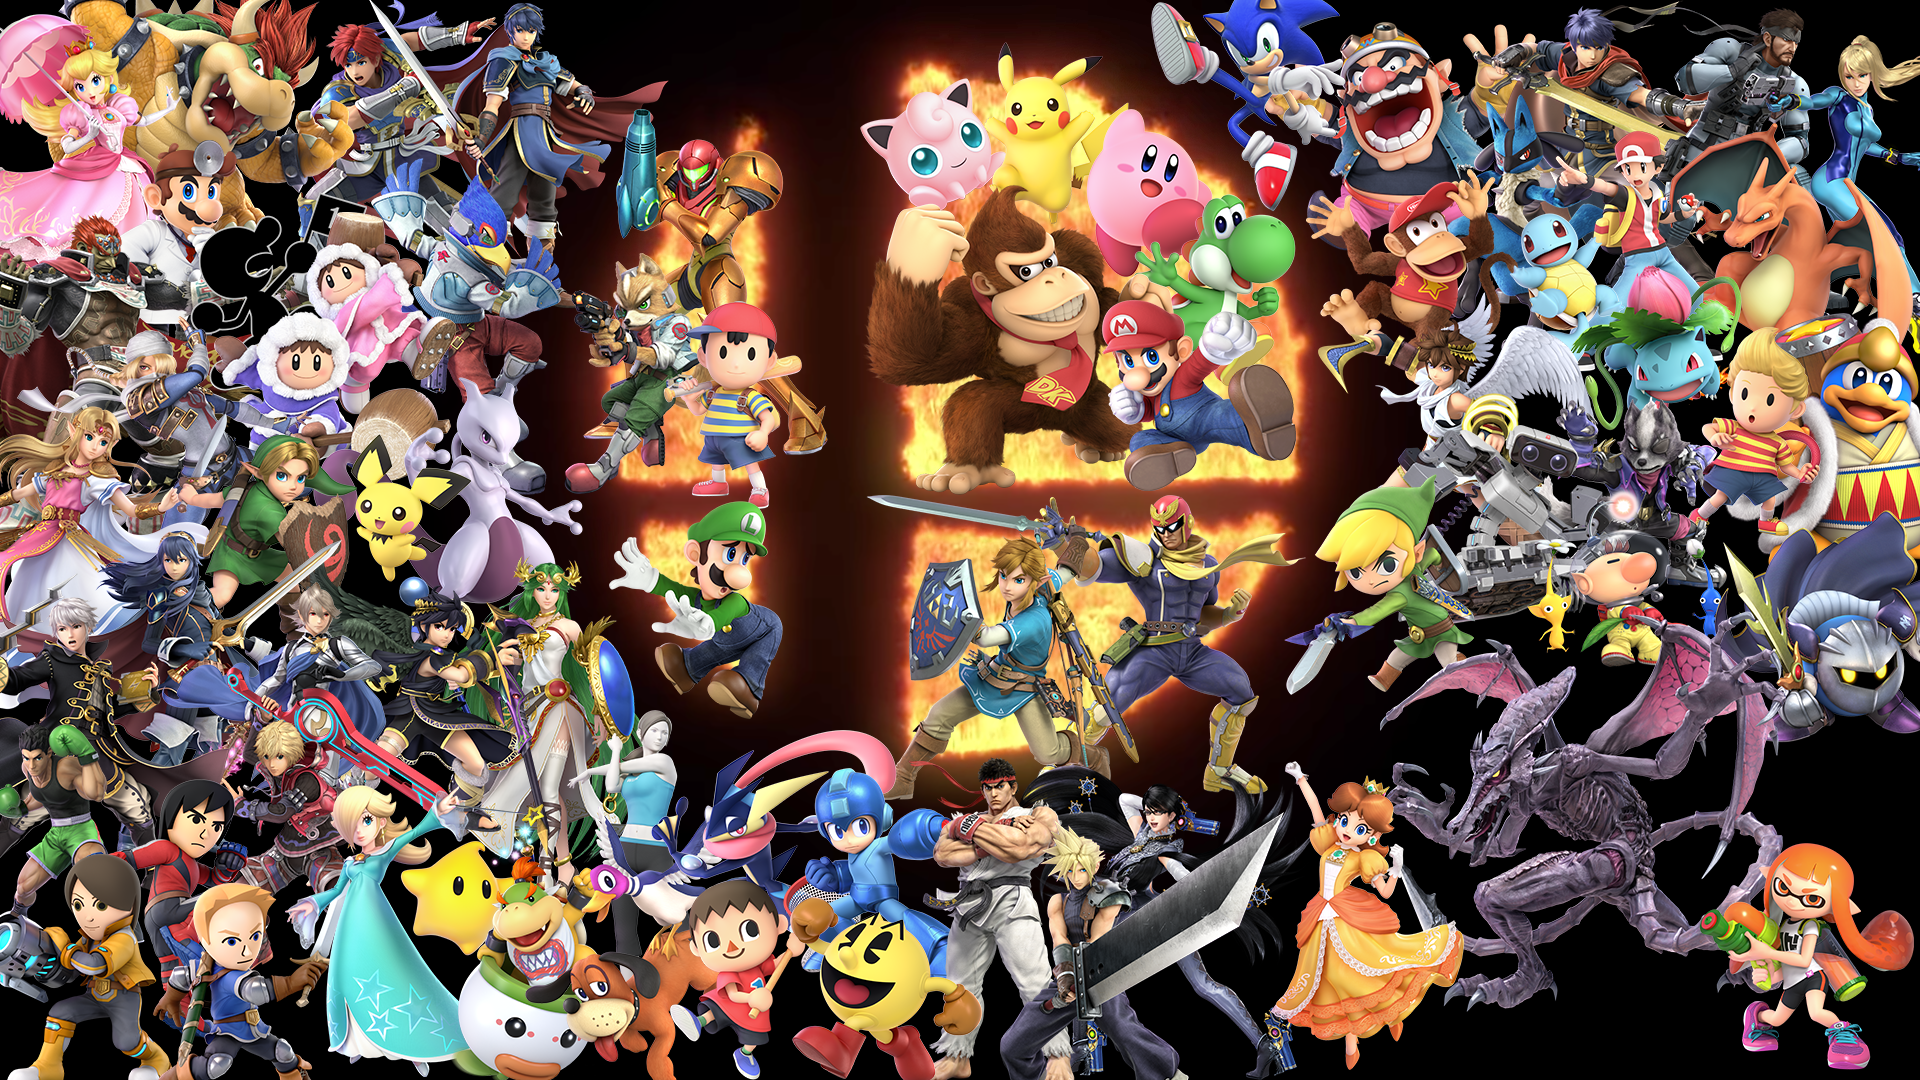 Super Smash Bros. Ultimate HD Wallpaper. Super smash bros, Smash bros, Bros